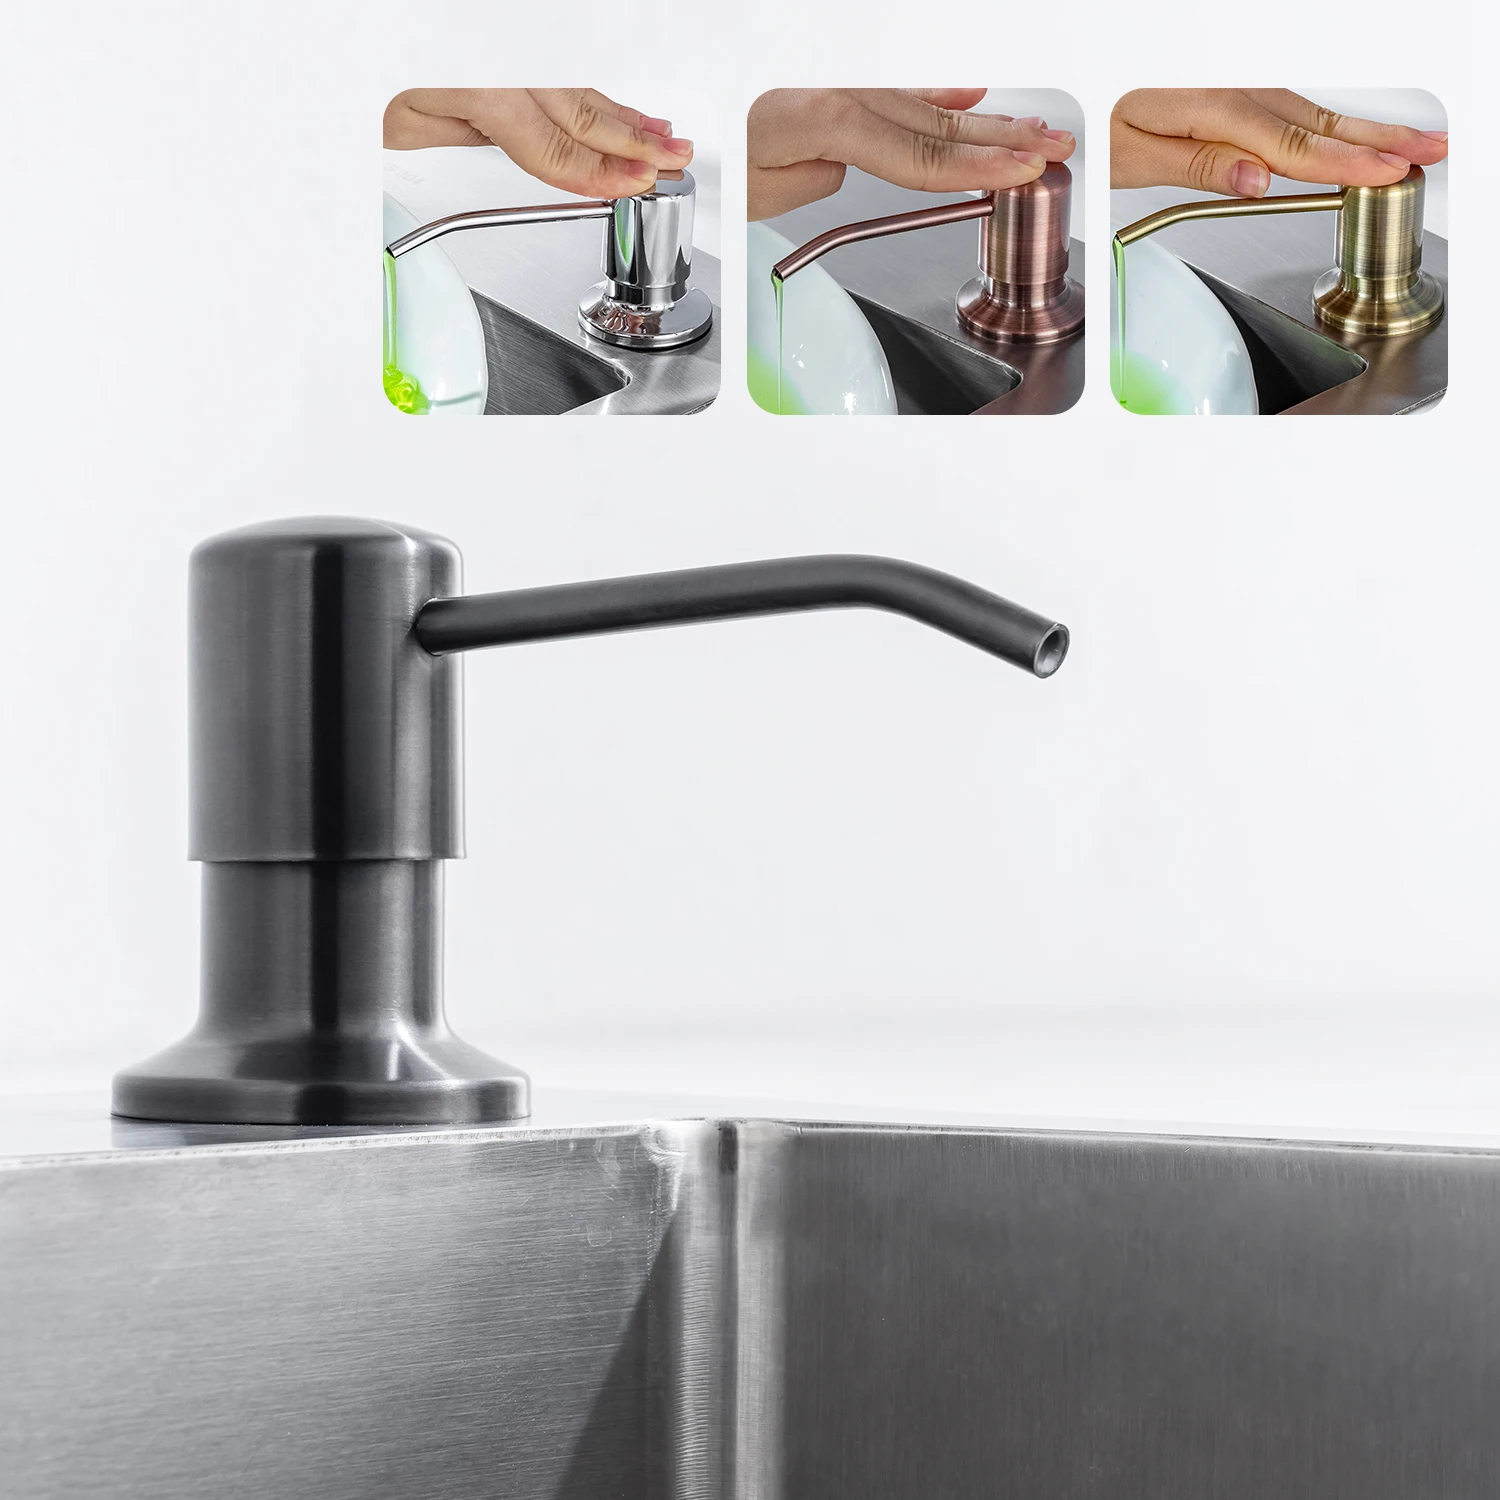 https://ae01.alicdn.com/kf/S6cad96b56f2146cea2d169bb65033fbdY/500ml-Gunmetal-Kitchen-Sink-Dispenser-Soap-Detergent-Dispenser-Bathroom-Counter-Liquid-Soap-Dispenser-Stainless-Steel-Head.jpg